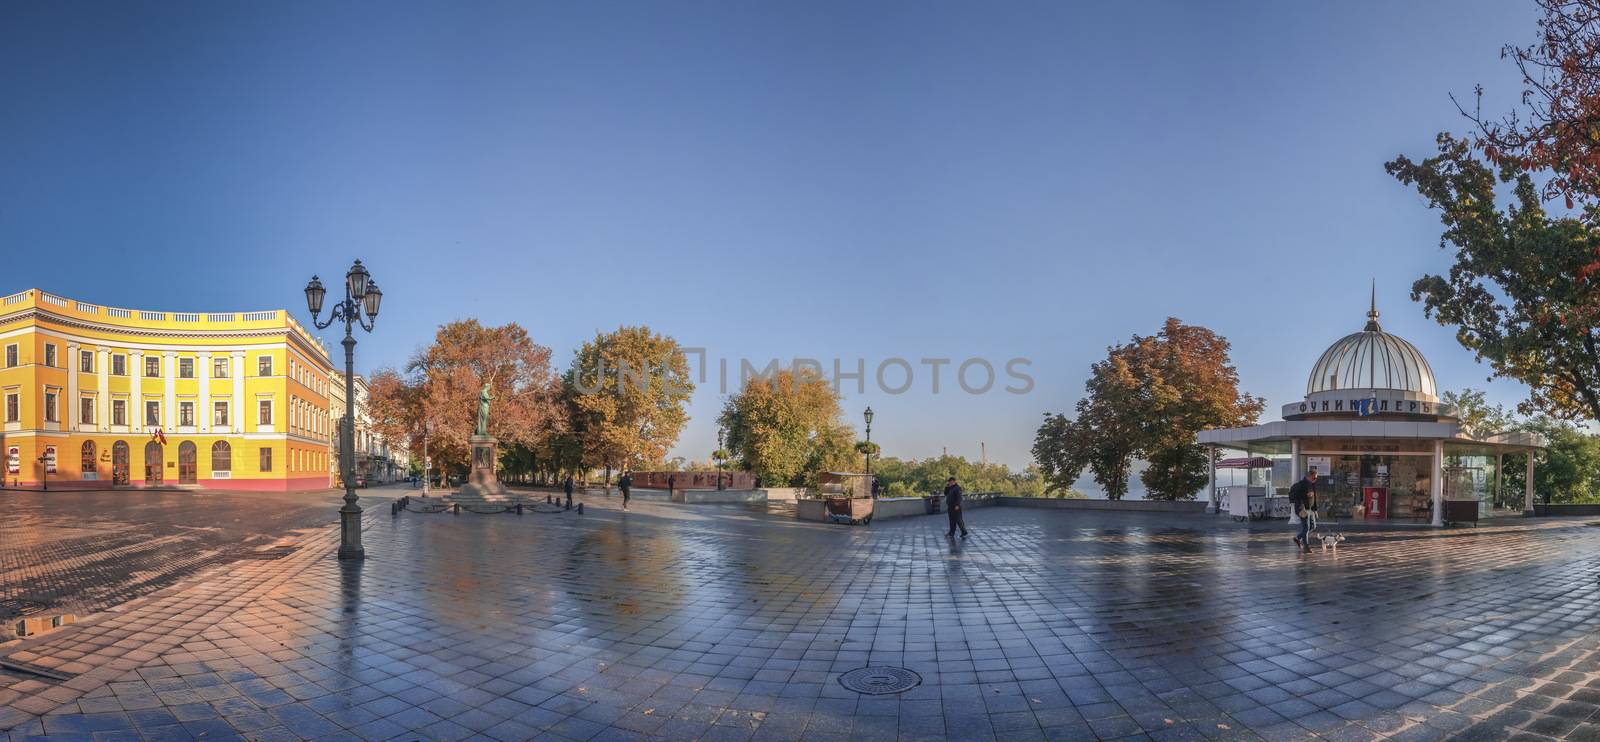 Odessa seaside boulevard in the autumn morning by Multipedia